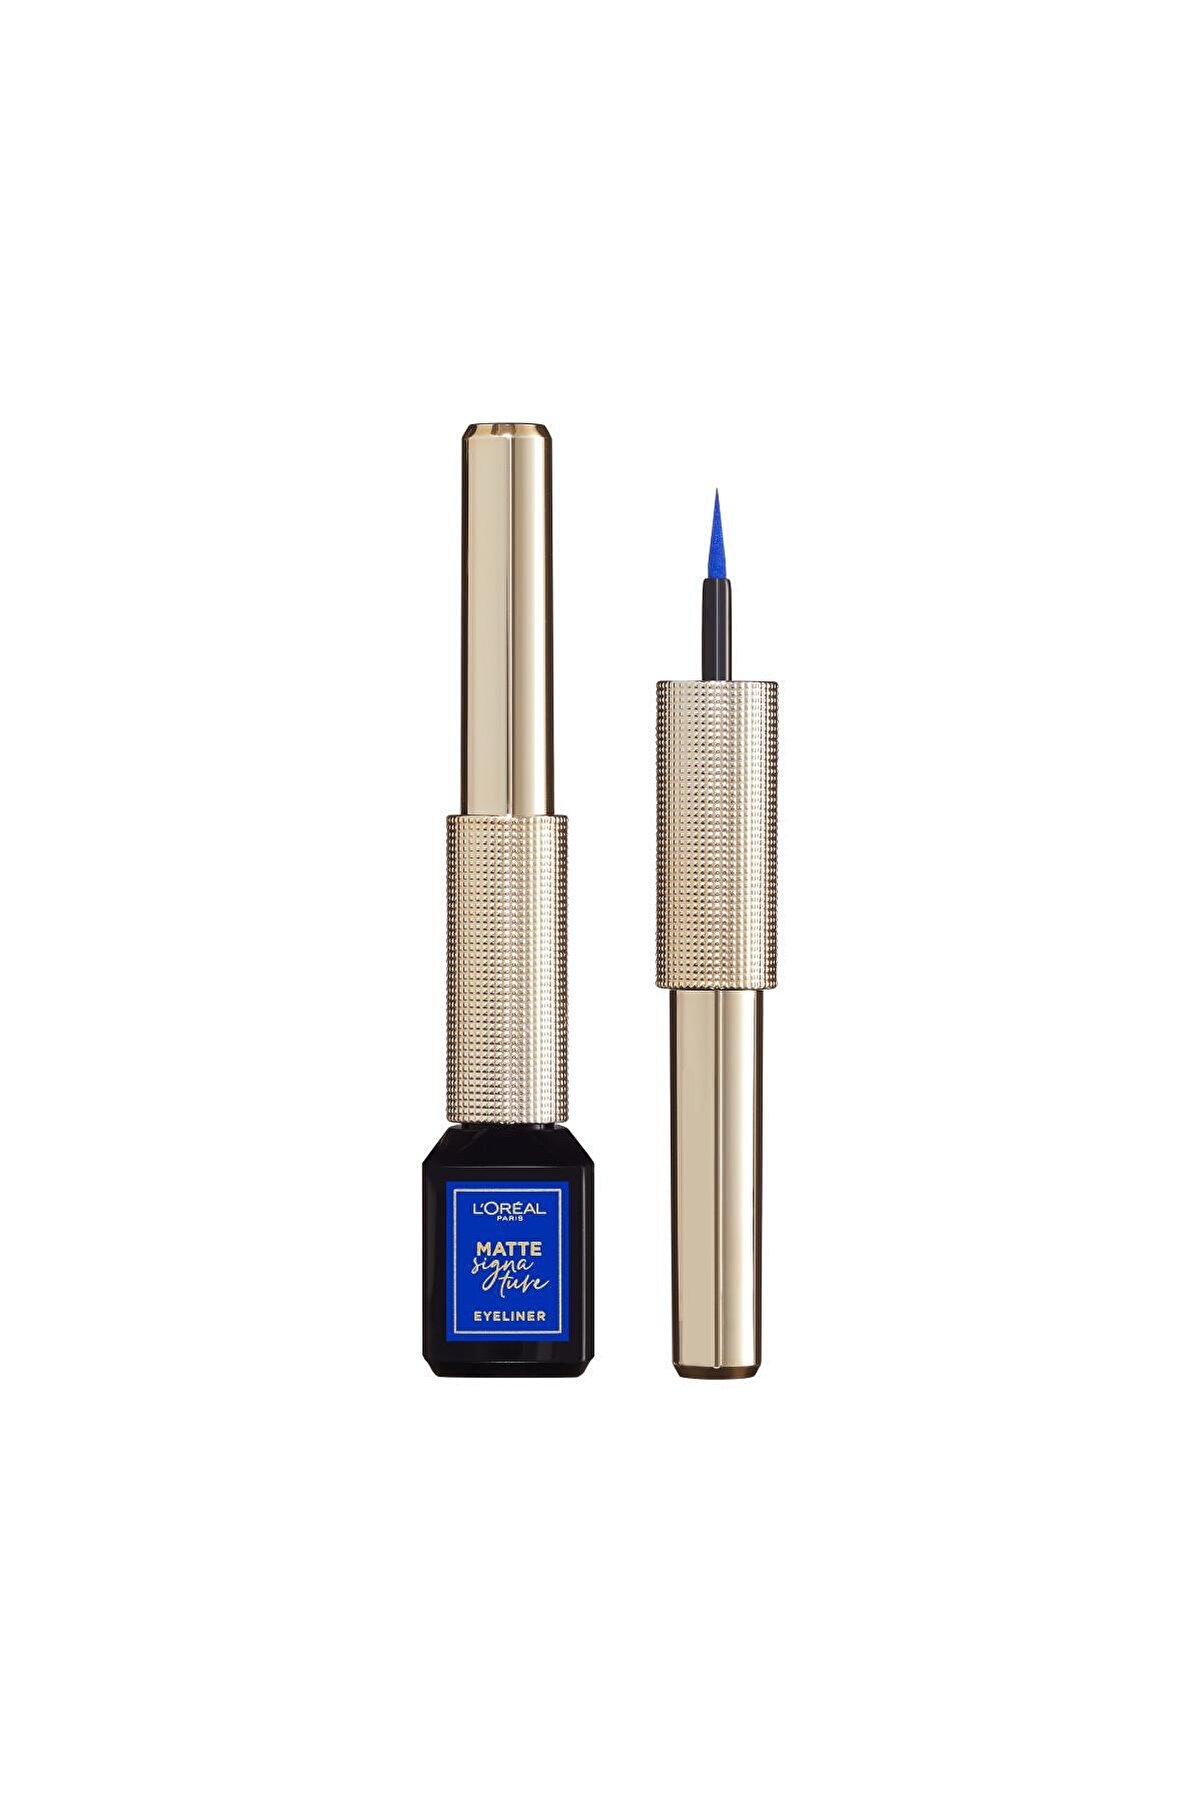 L'Oreal Paris Mat Eyeliner - Matte Signature Eyeliner 02 Blue 30175235